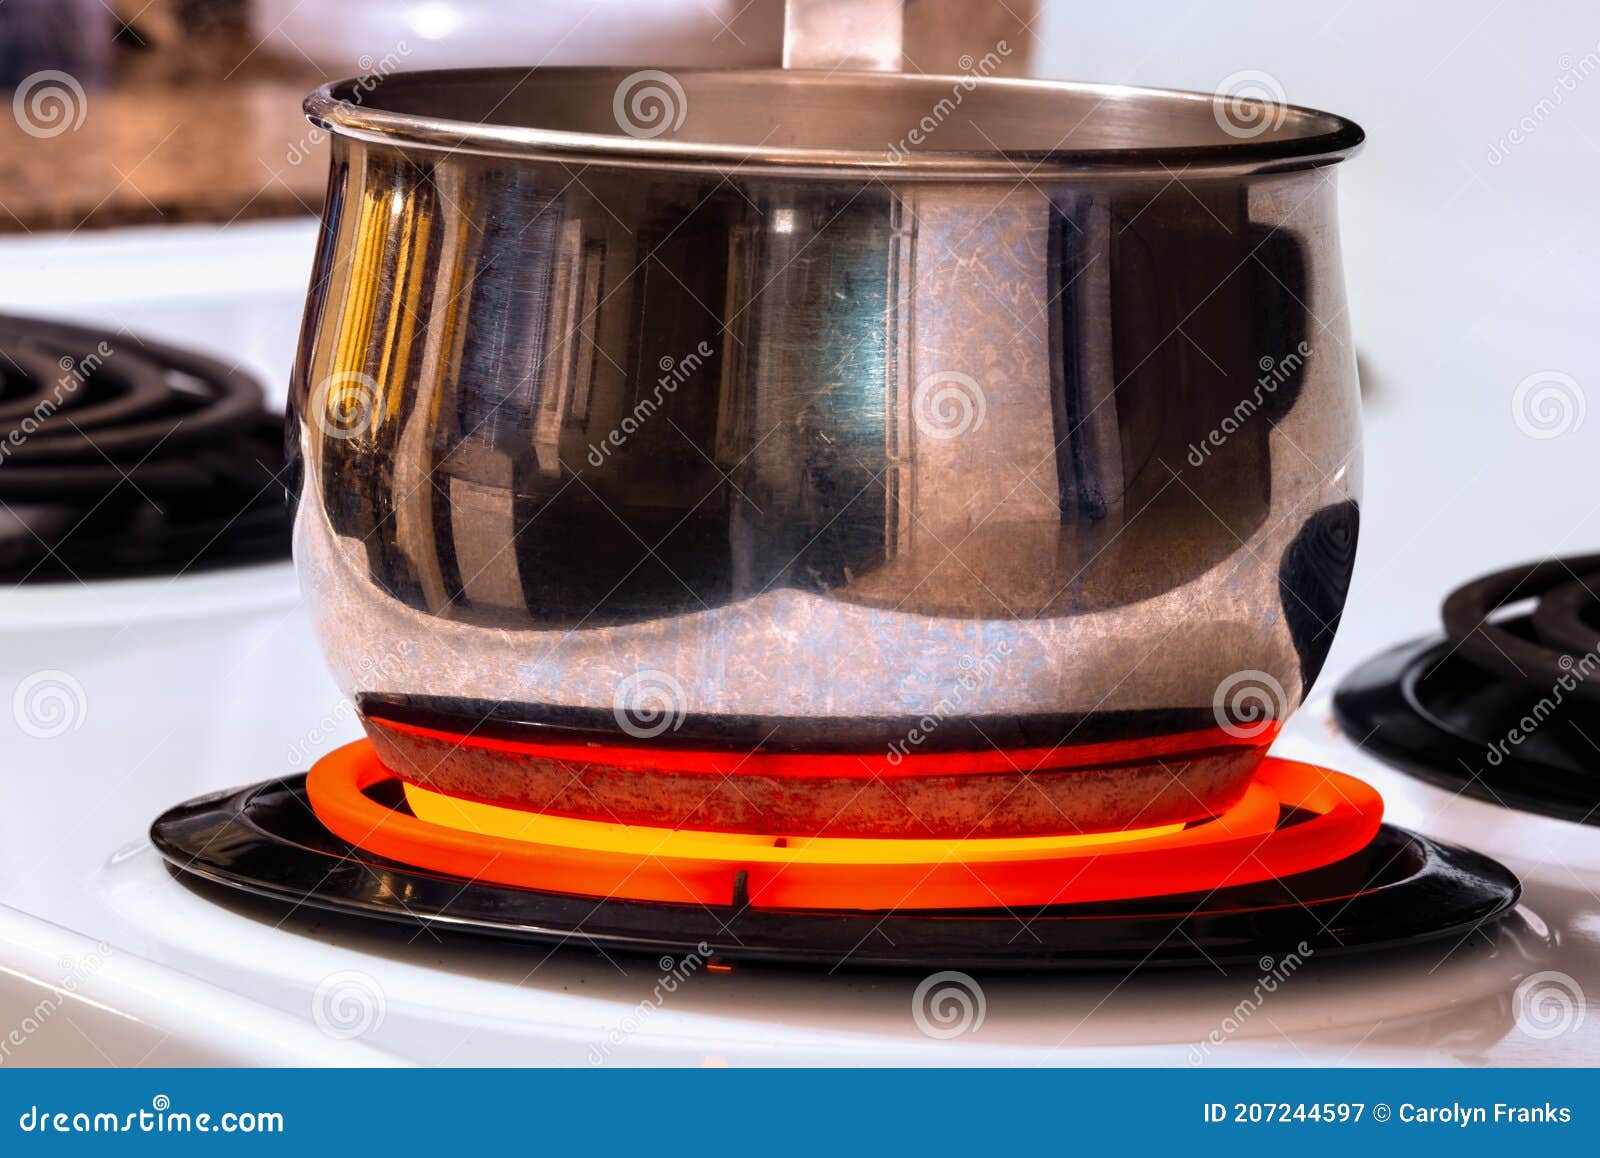 https://thumbs.dreamstime.com/z/cooking-pot-top-hot-stove-burner-horizontal-shot-very-207244597.jpg